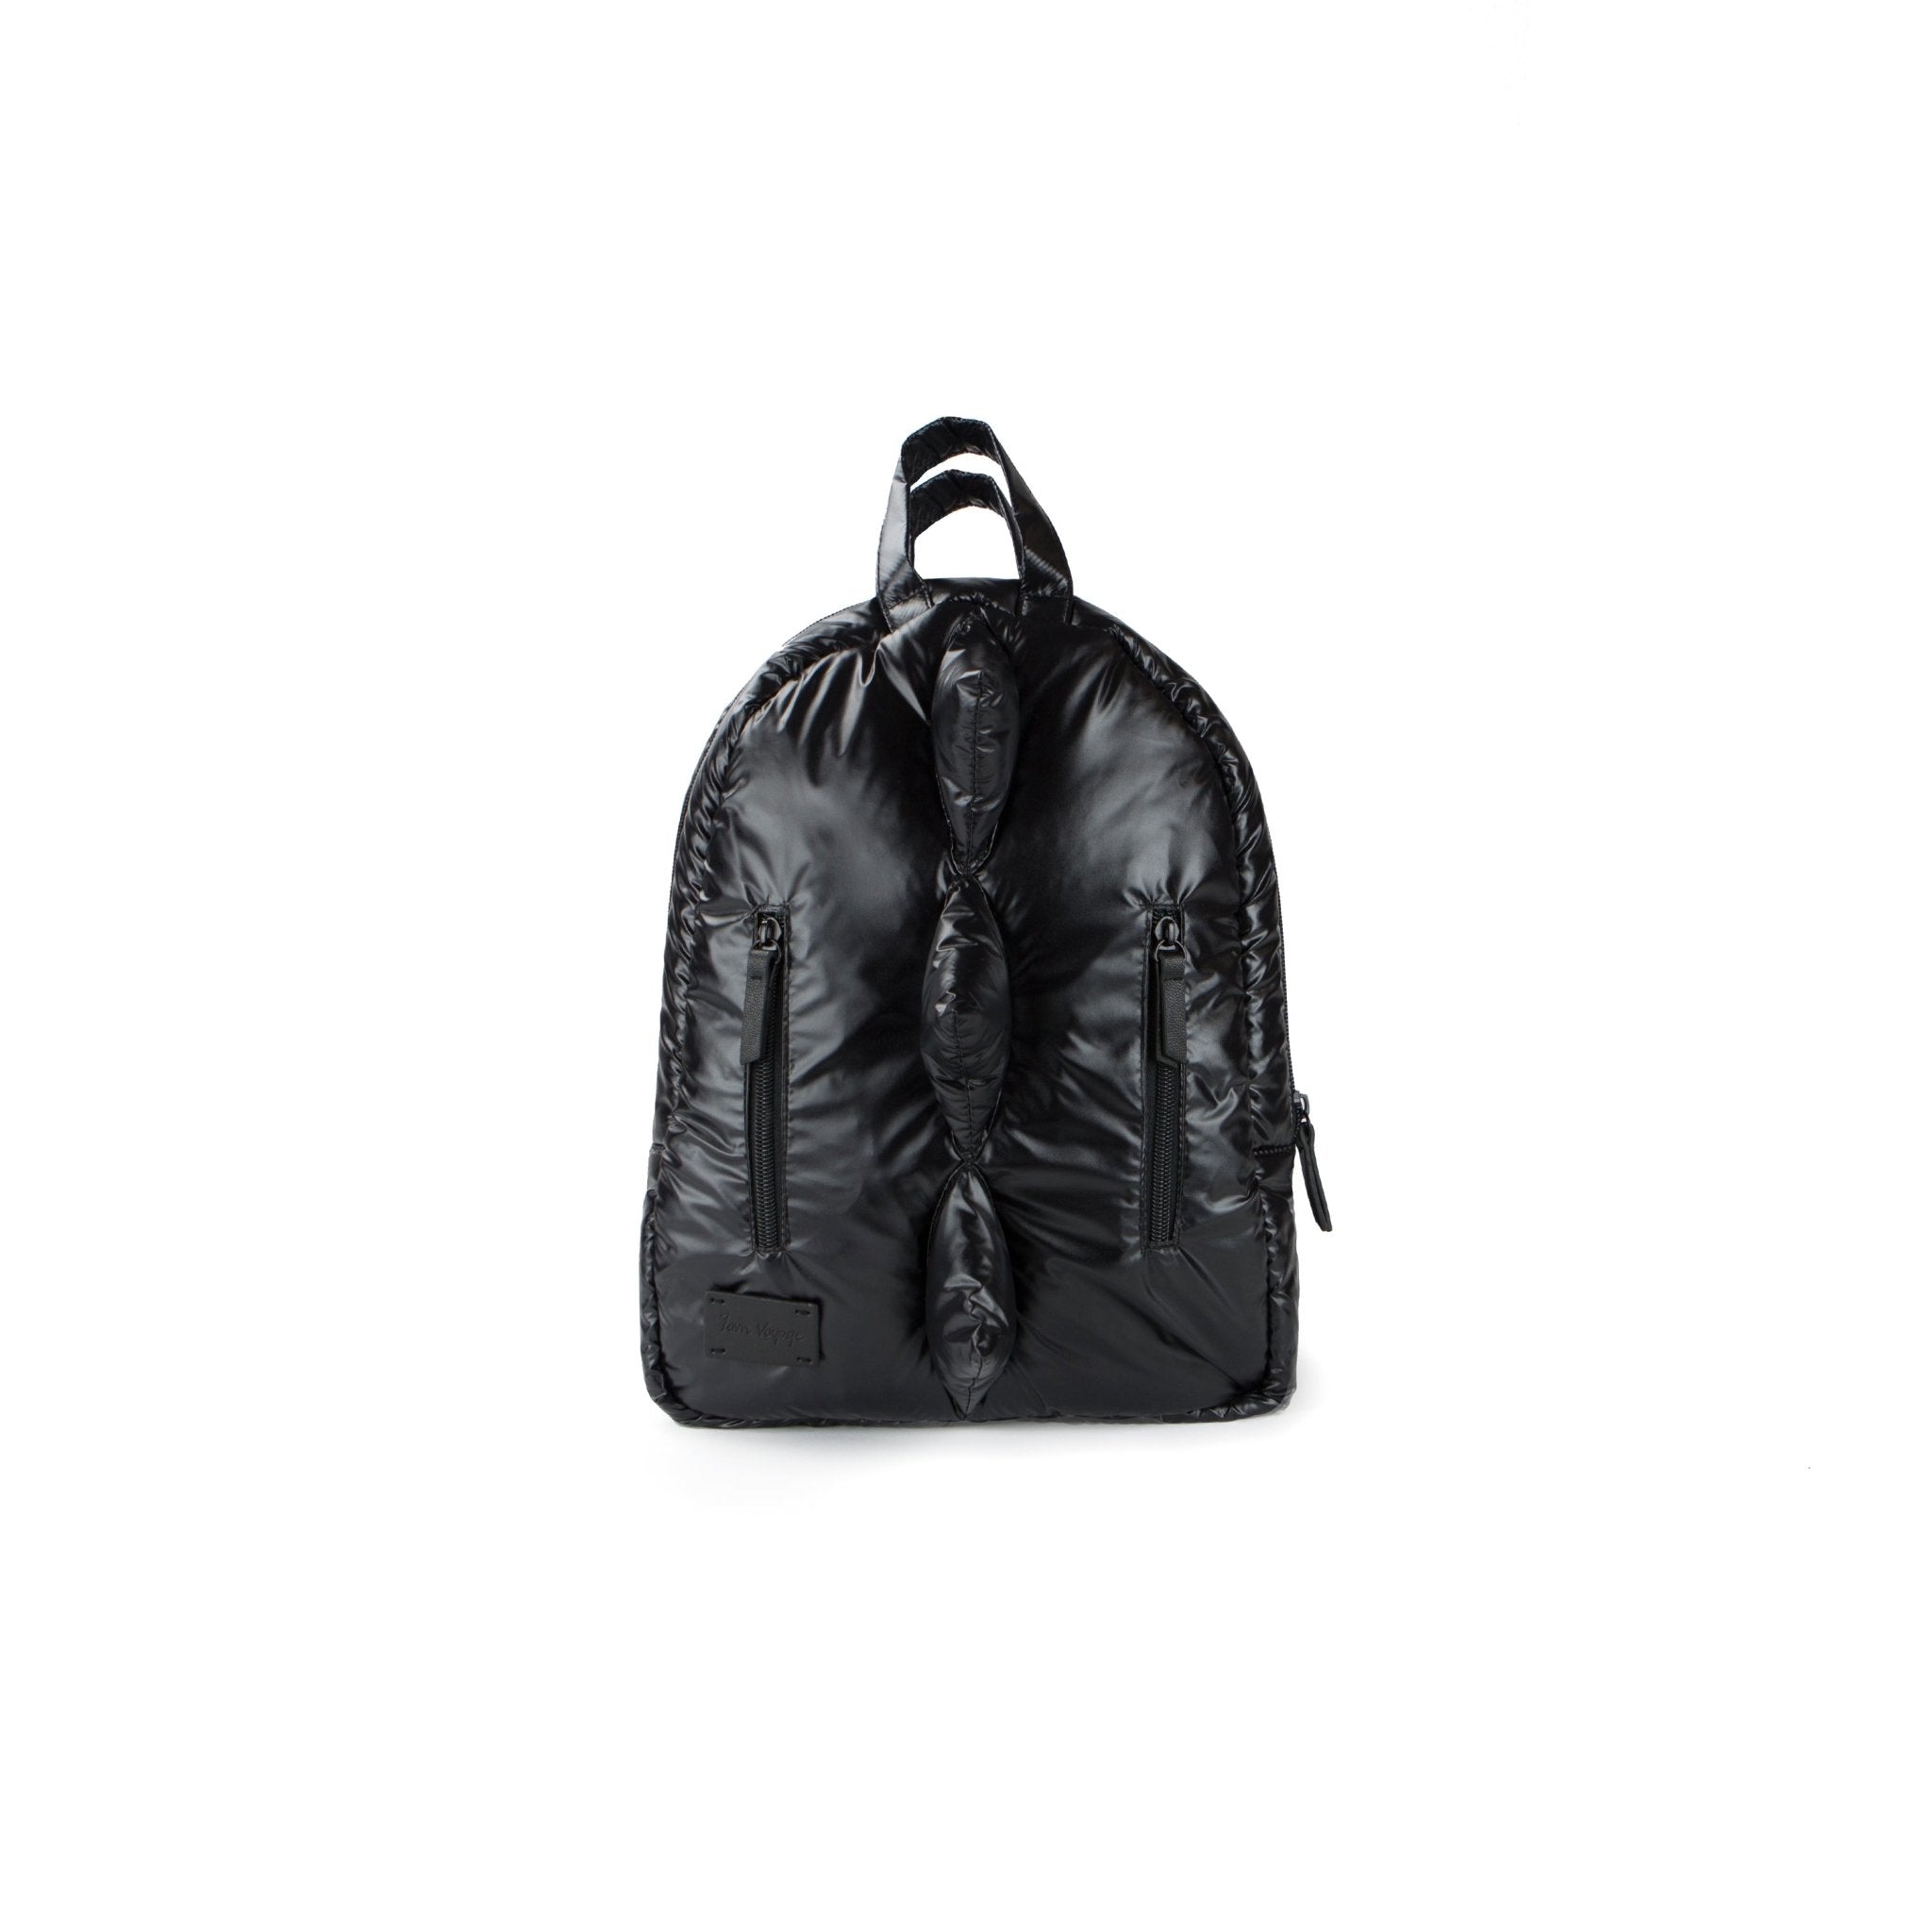 7 AM Mini Dino Backpack - ANB Baby -$20 - $50